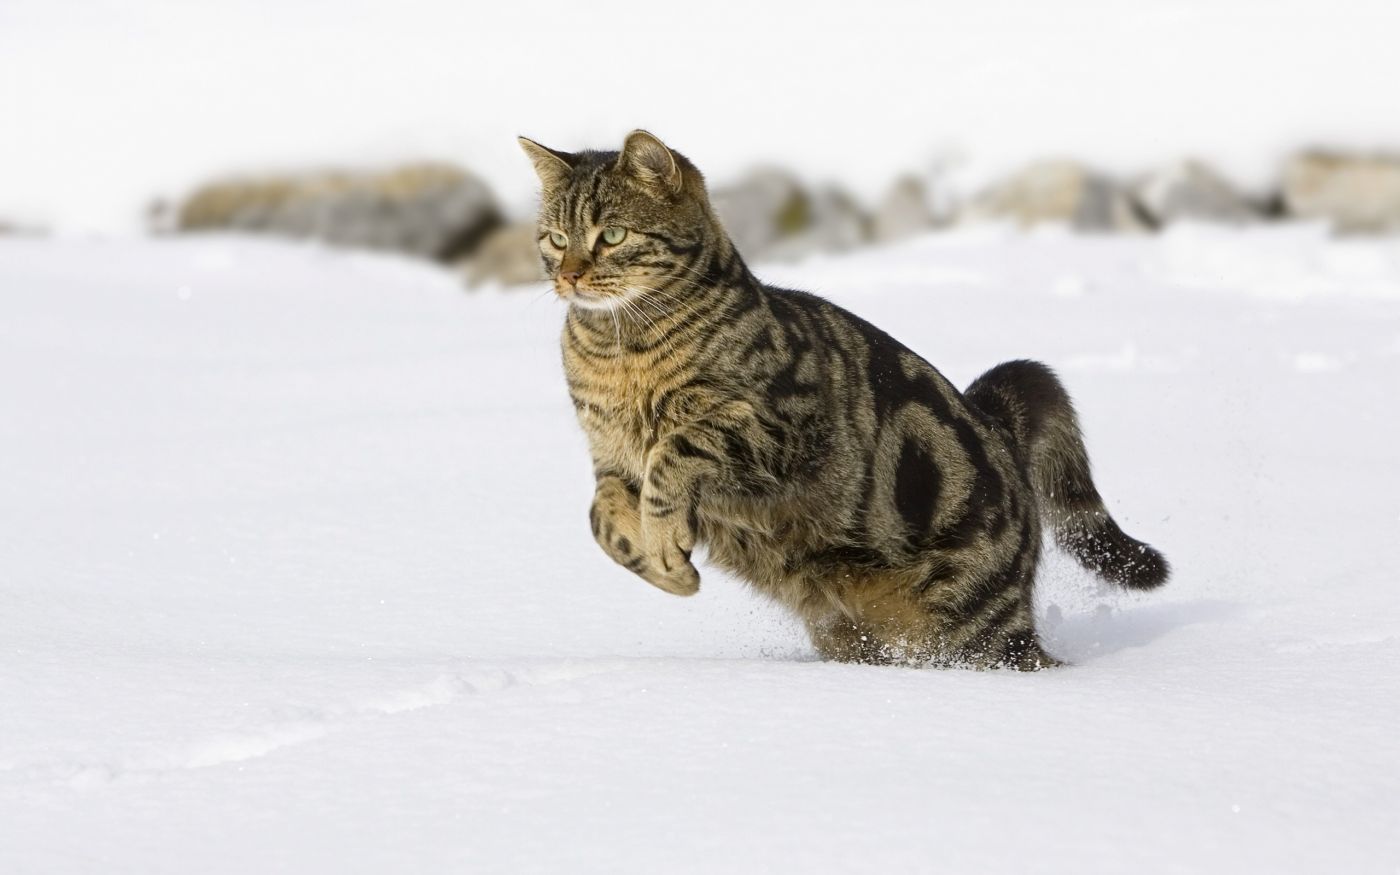 Wallpaper cat, cat, jump, flight images for desktop, section кошки - download